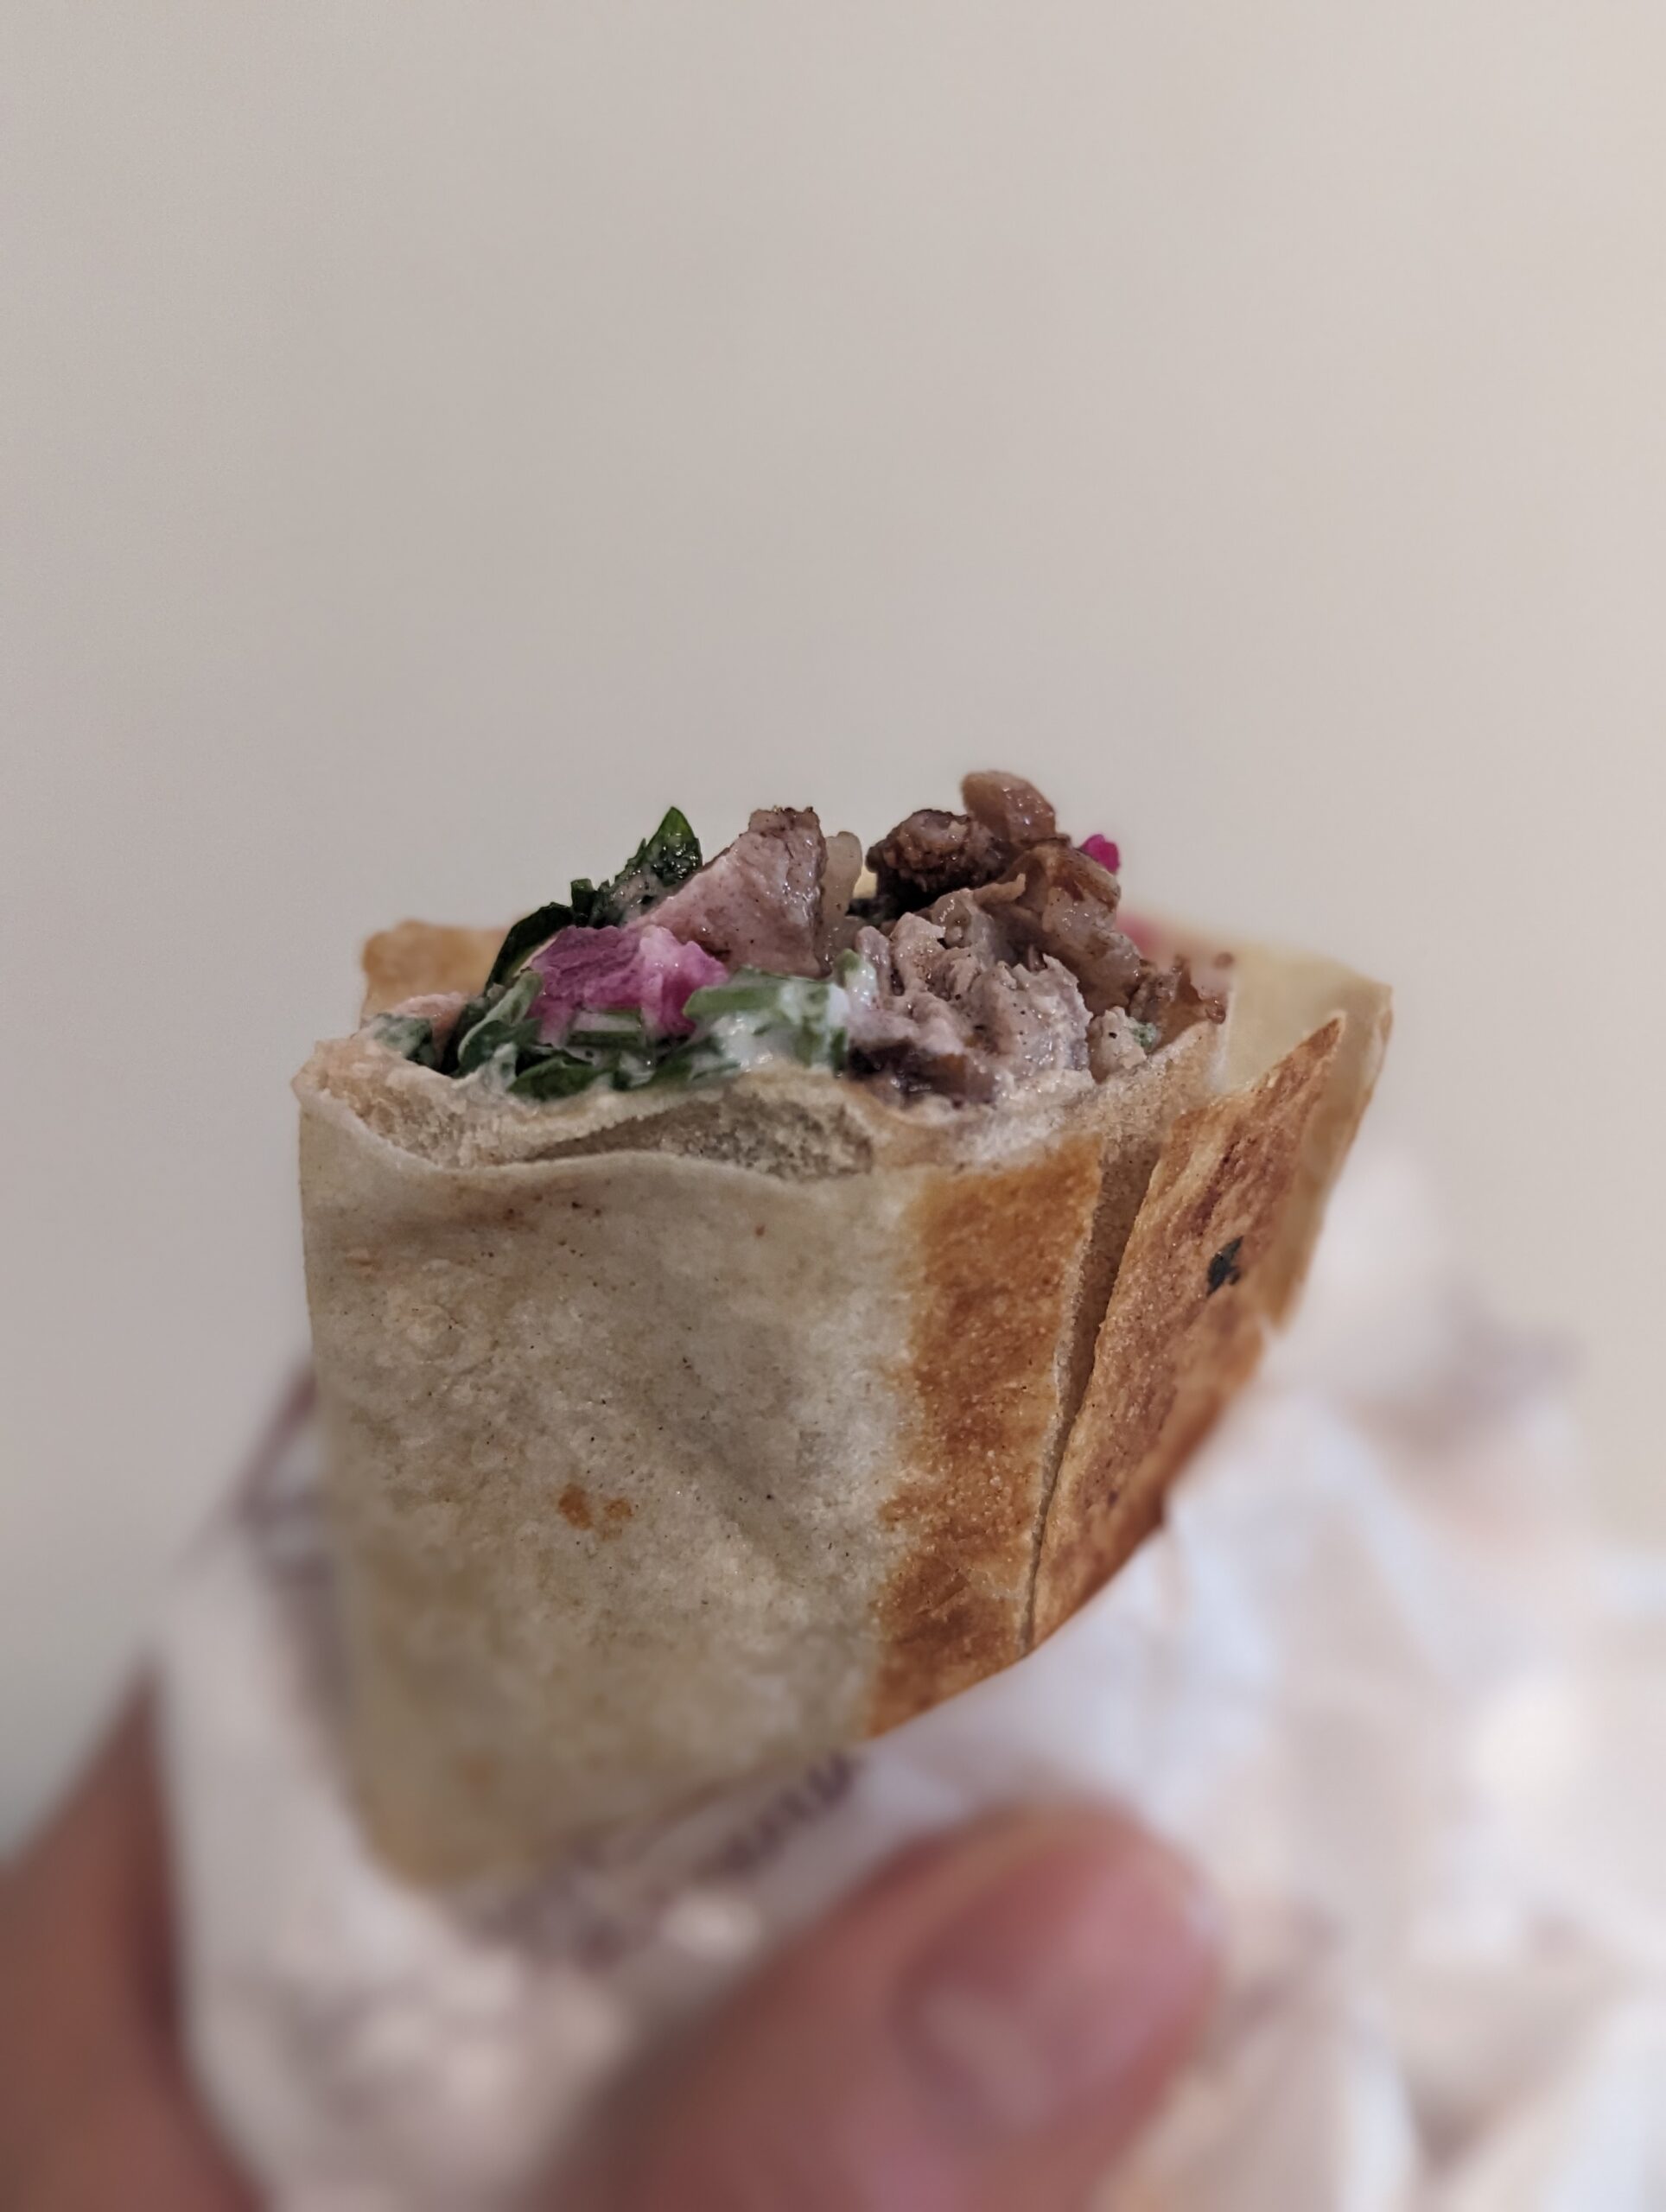 Crispy and Flavorful Syrian Shawarma at Farooj Al Shami | Cheap Eats Dubai 92